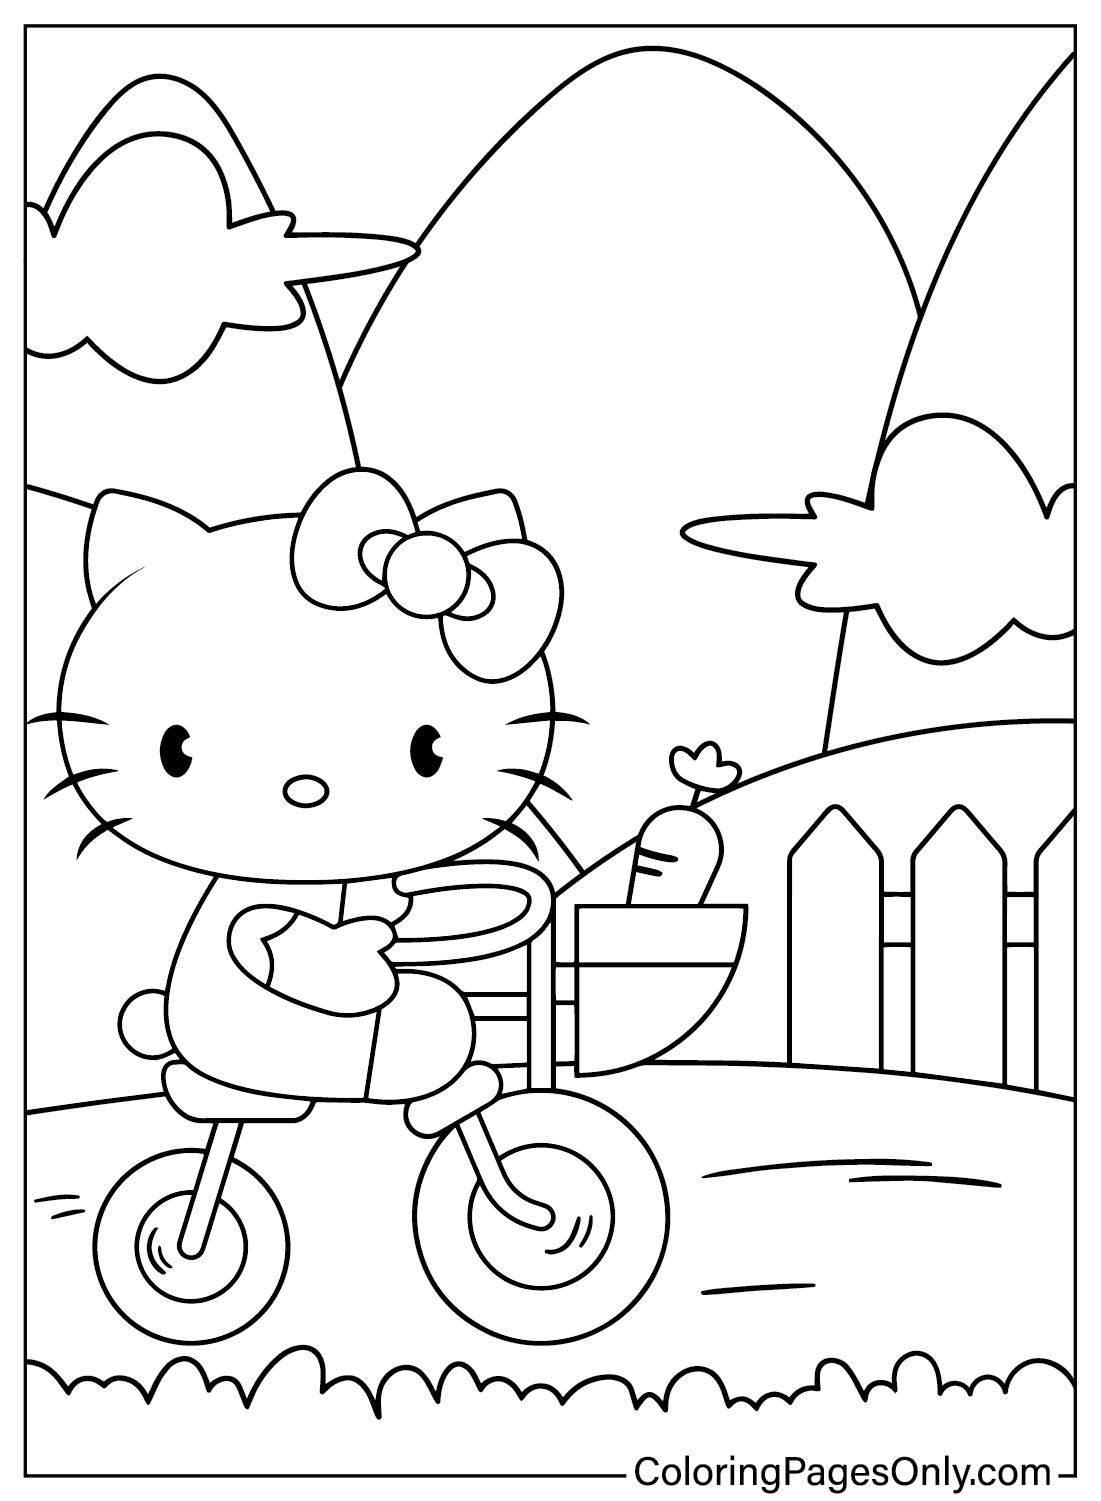 Printable Hello Kitty Coloring Page